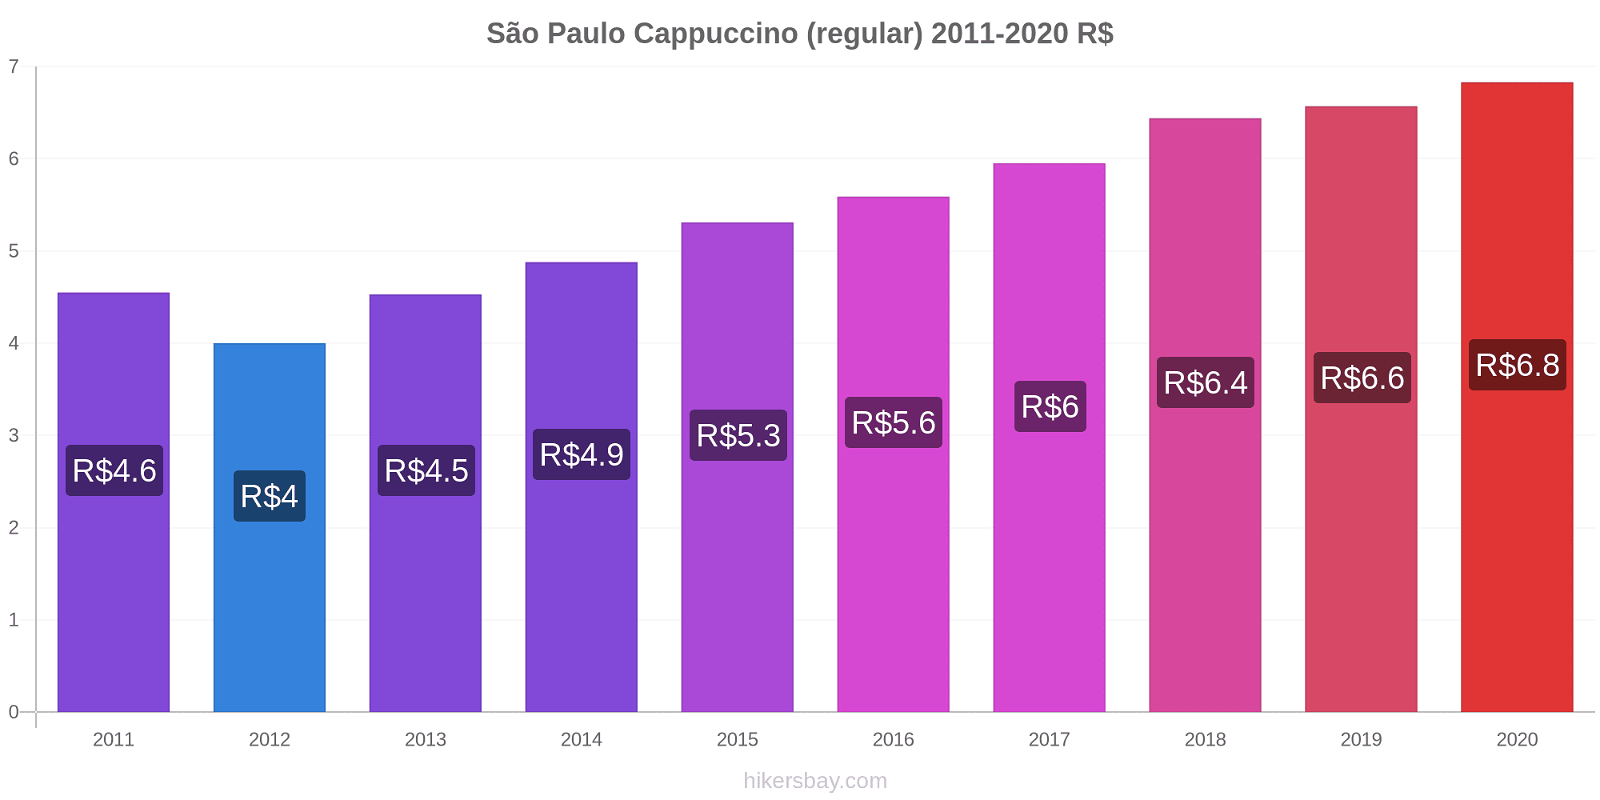 São Paulo price changes Cappuccino (regular) hikersbay.com